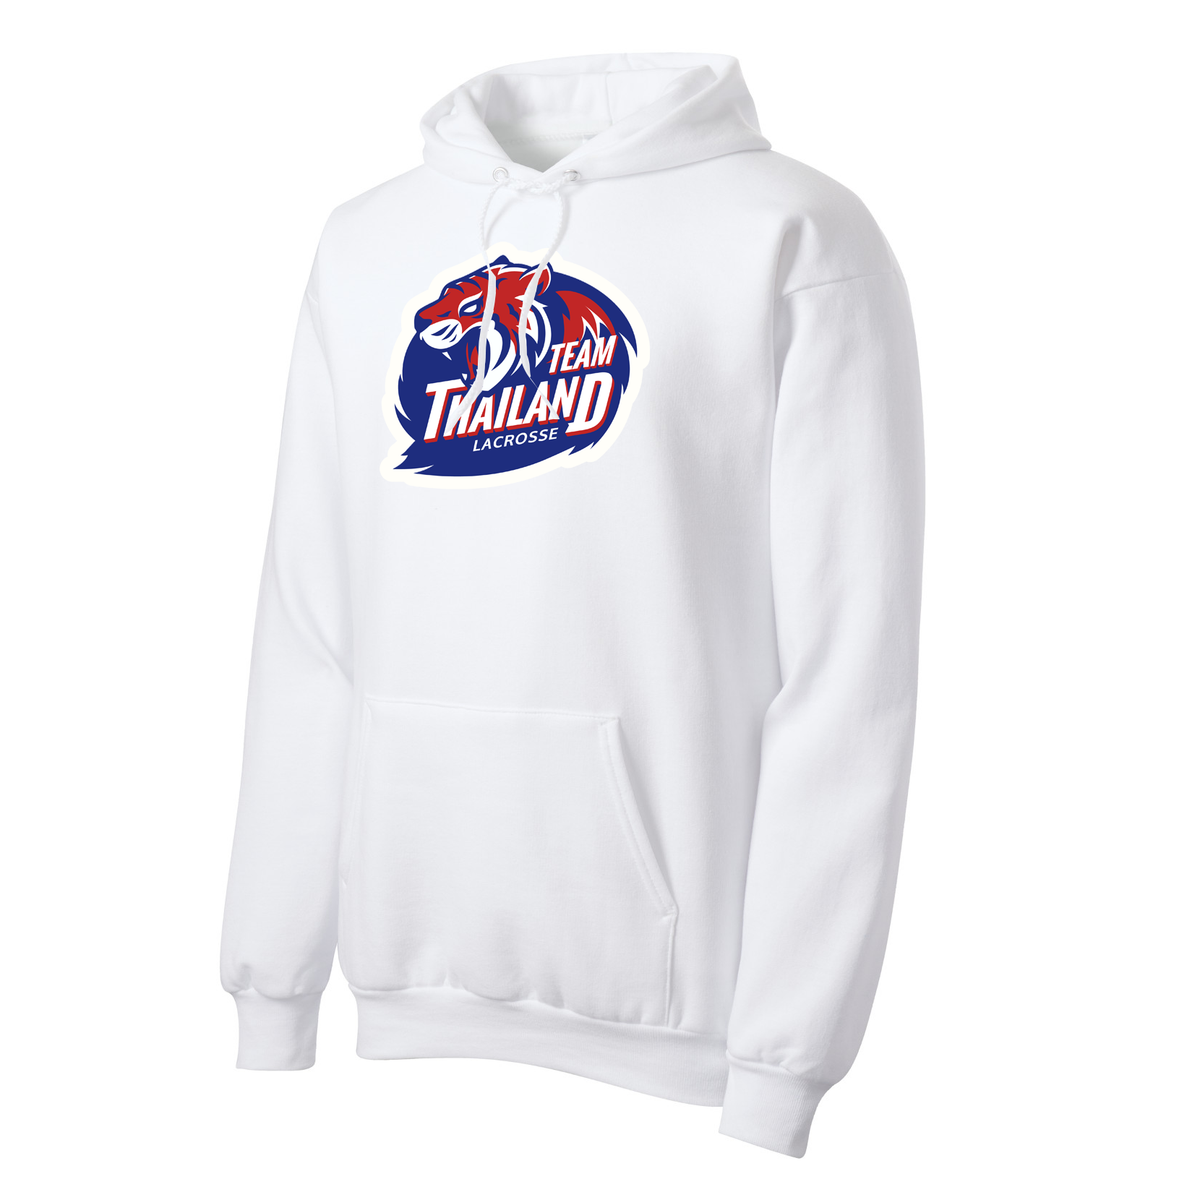 Thailand Lacrosse Sweatshirt